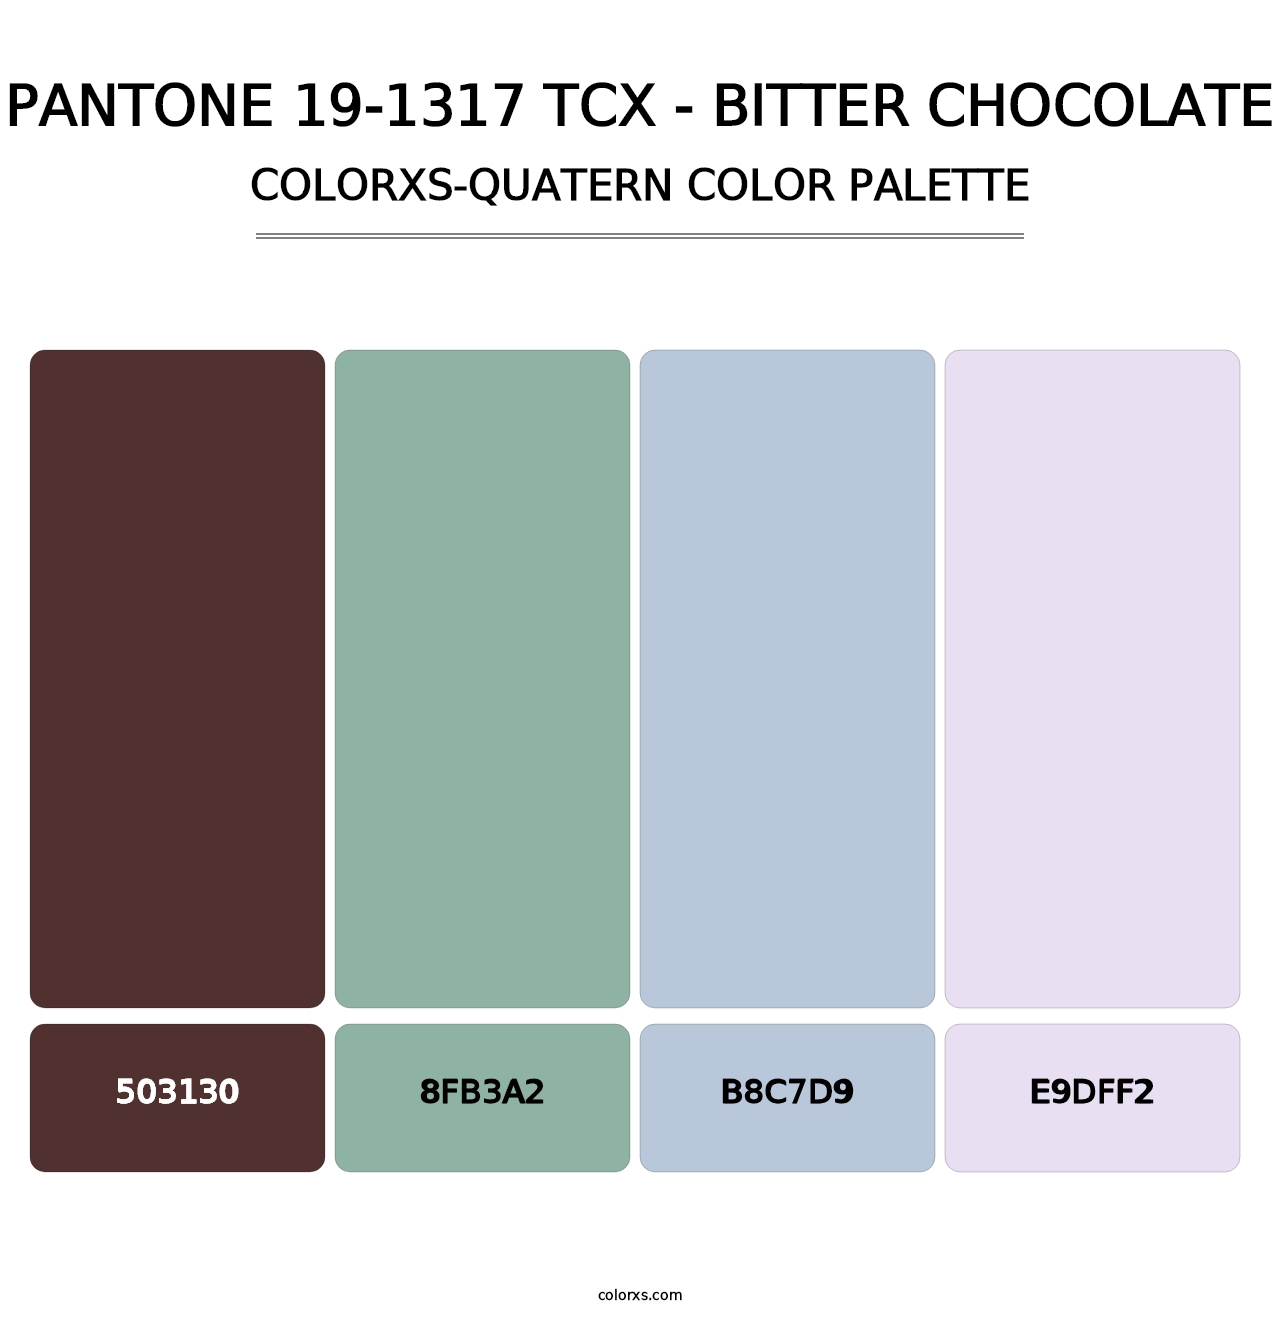 PANTONE 19-1317 TCX - Bitter Chocolate - Colorxs Quatern Palette